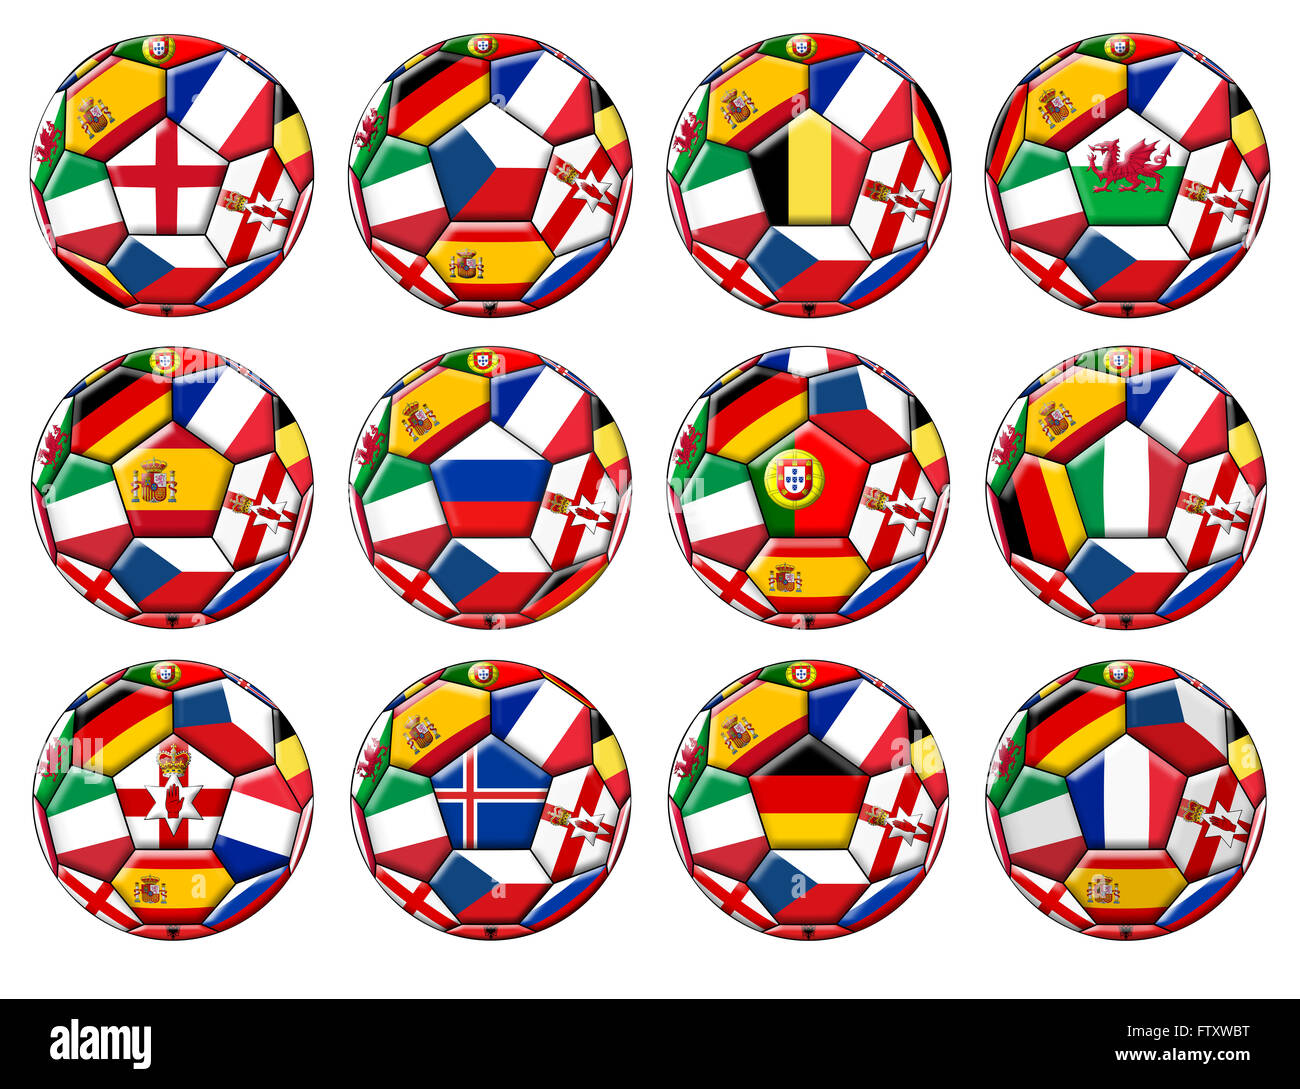 Le sfere con flag di vari paesi europei Foto Stock